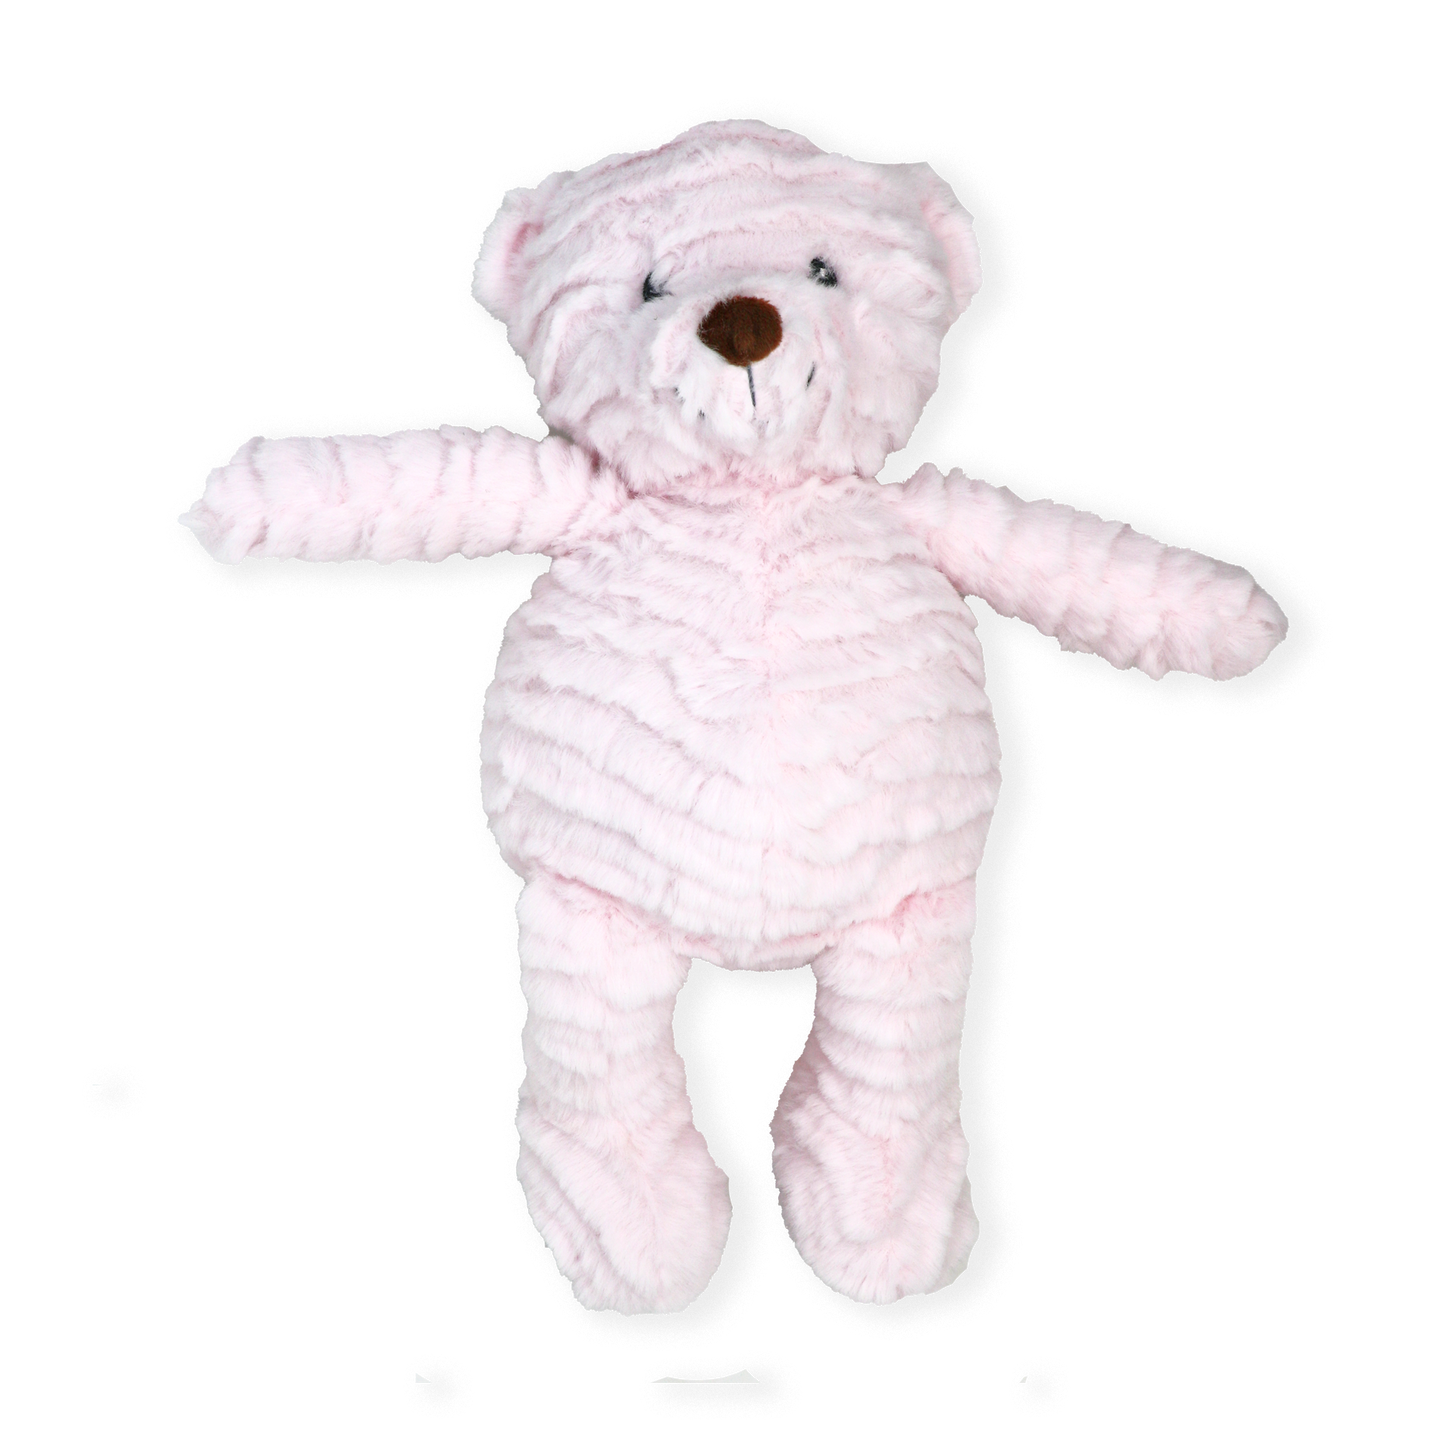 Plush Stuffed Teddy Bear - Pink